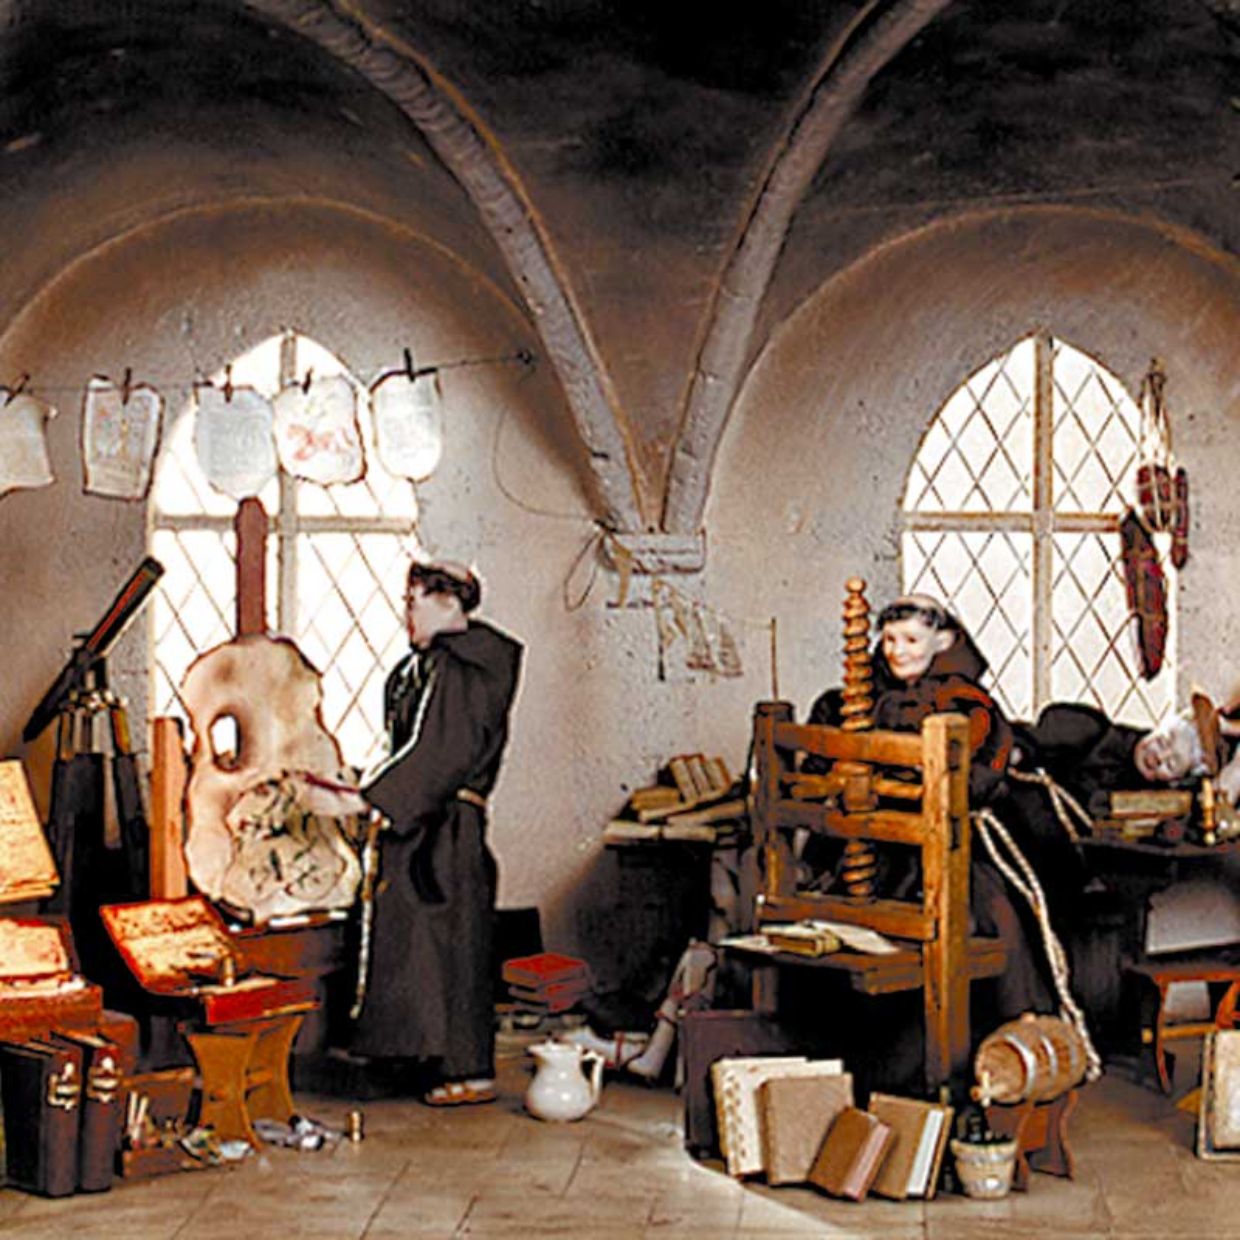 Monastic-printing shop, 1997, France